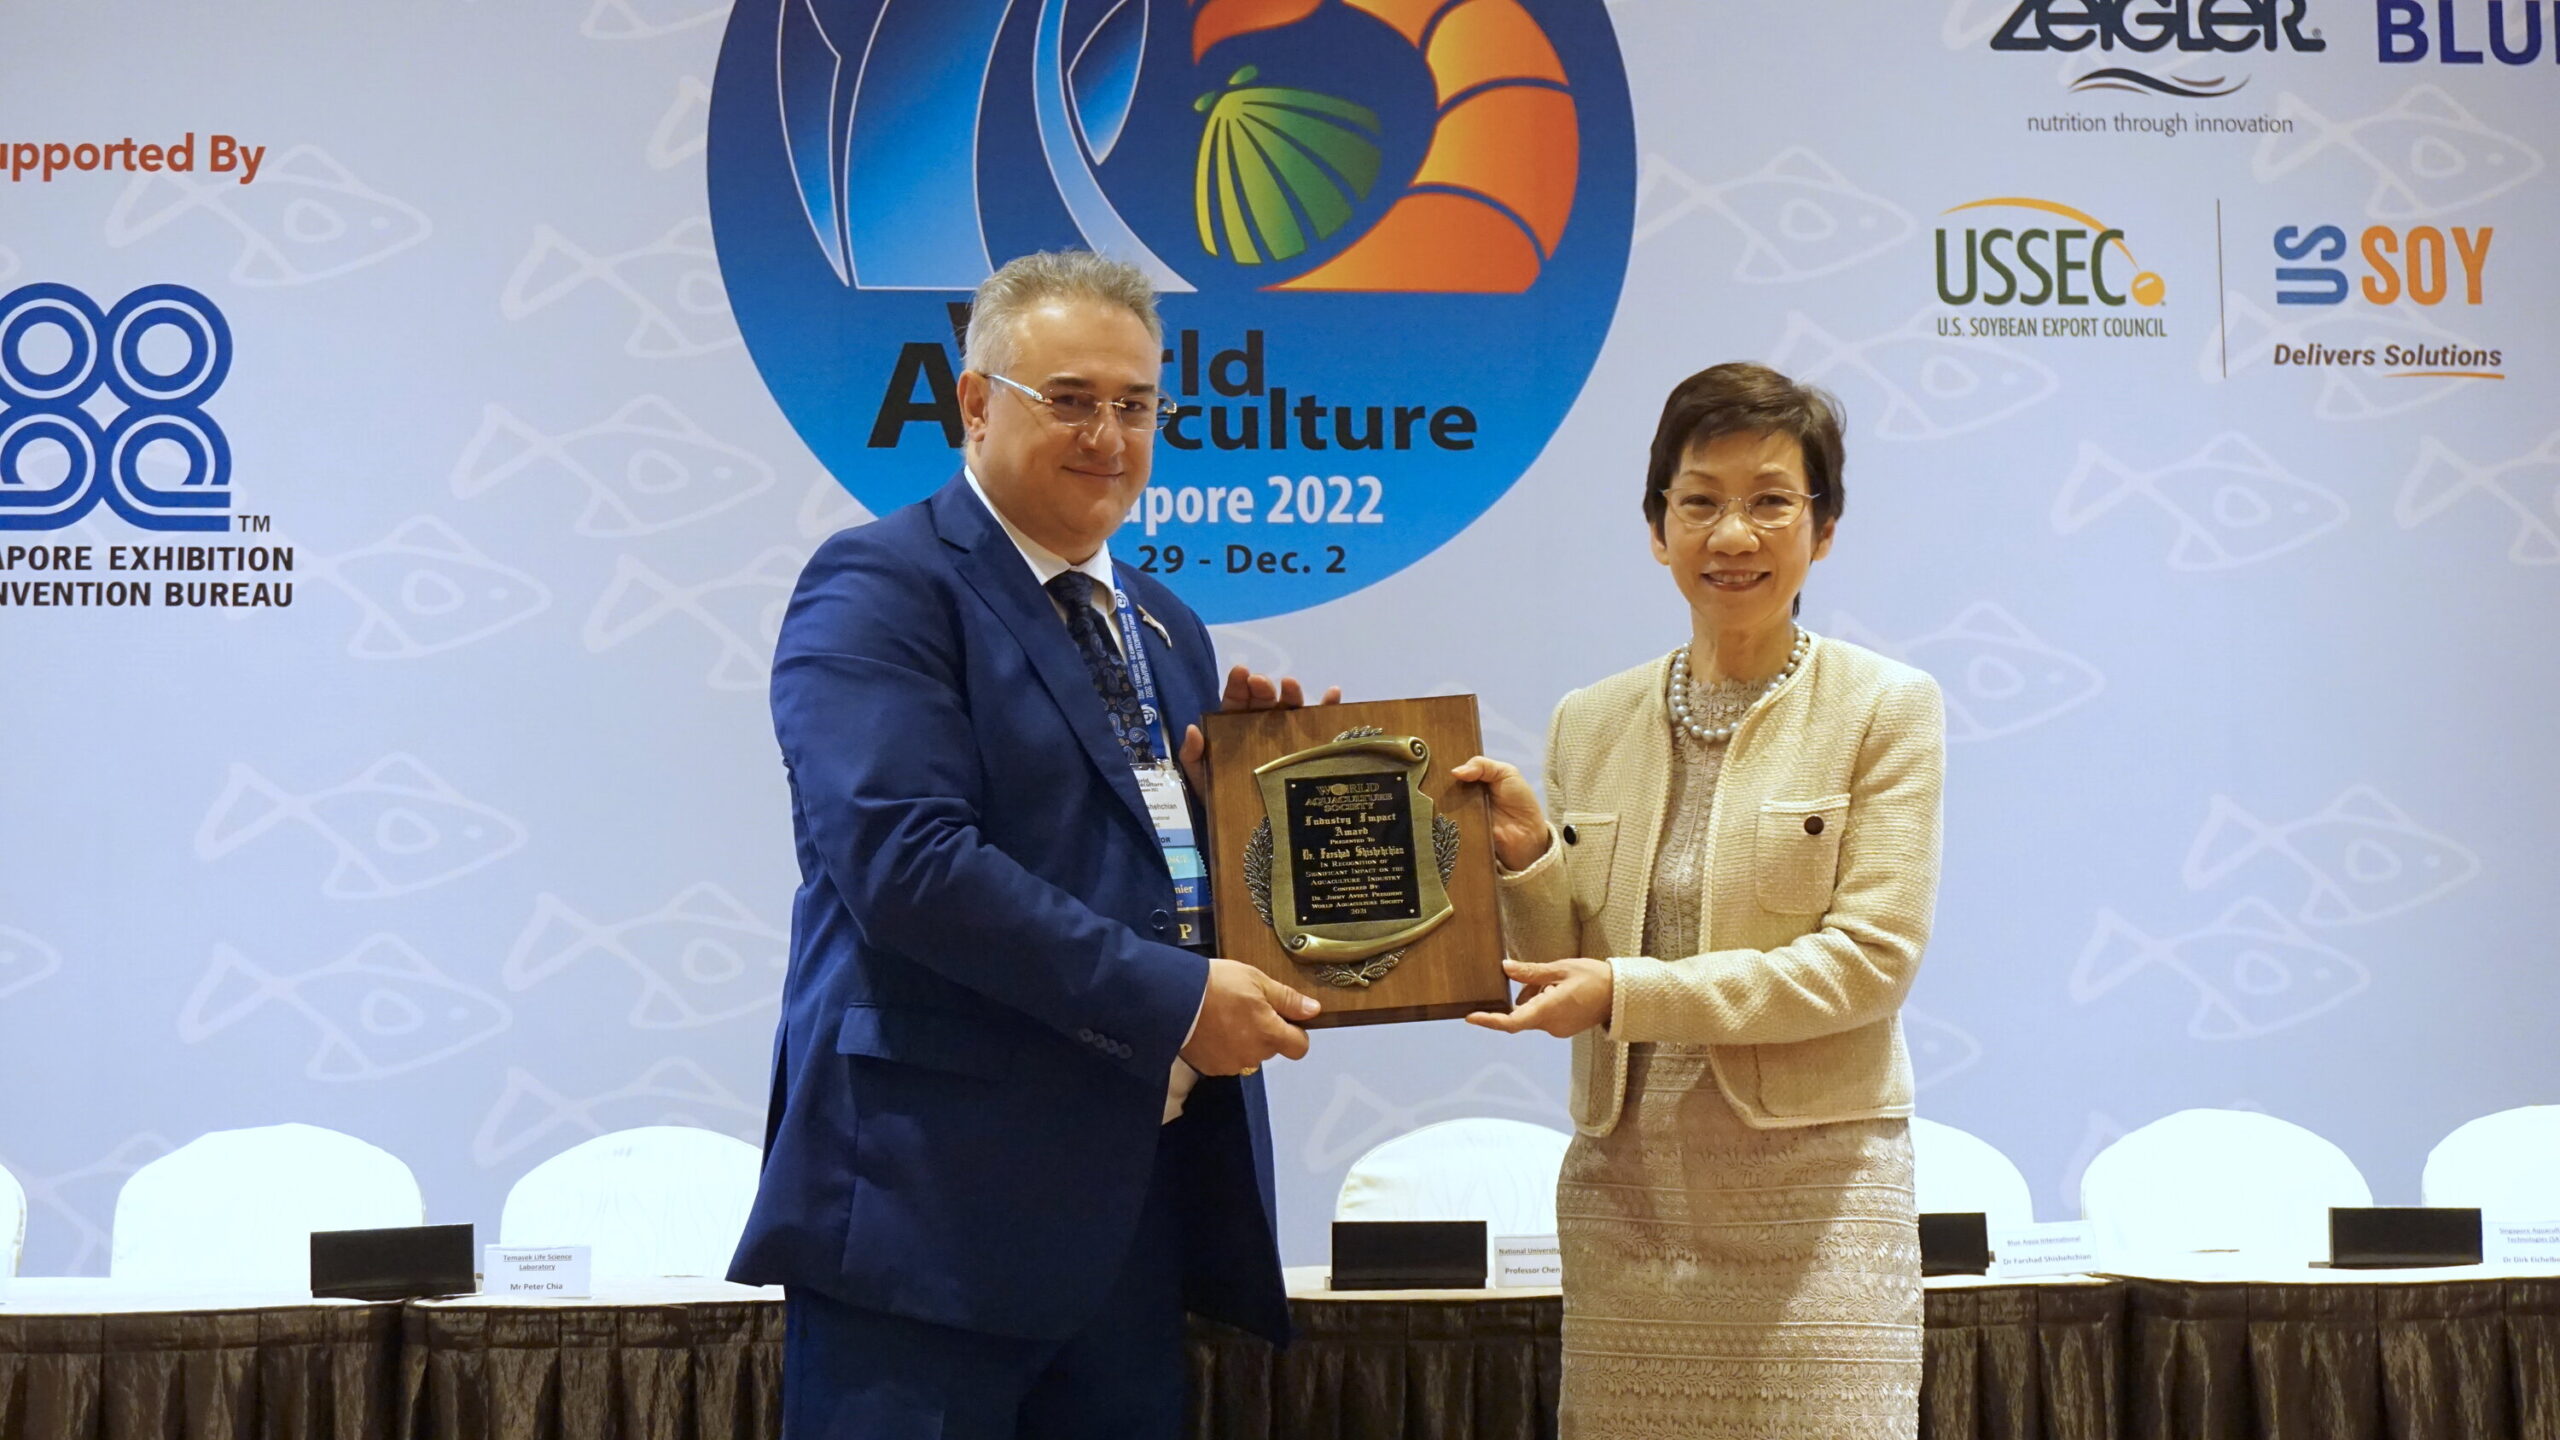 Dr Farshad Shishehchian Receives Industry Impact Award 2020